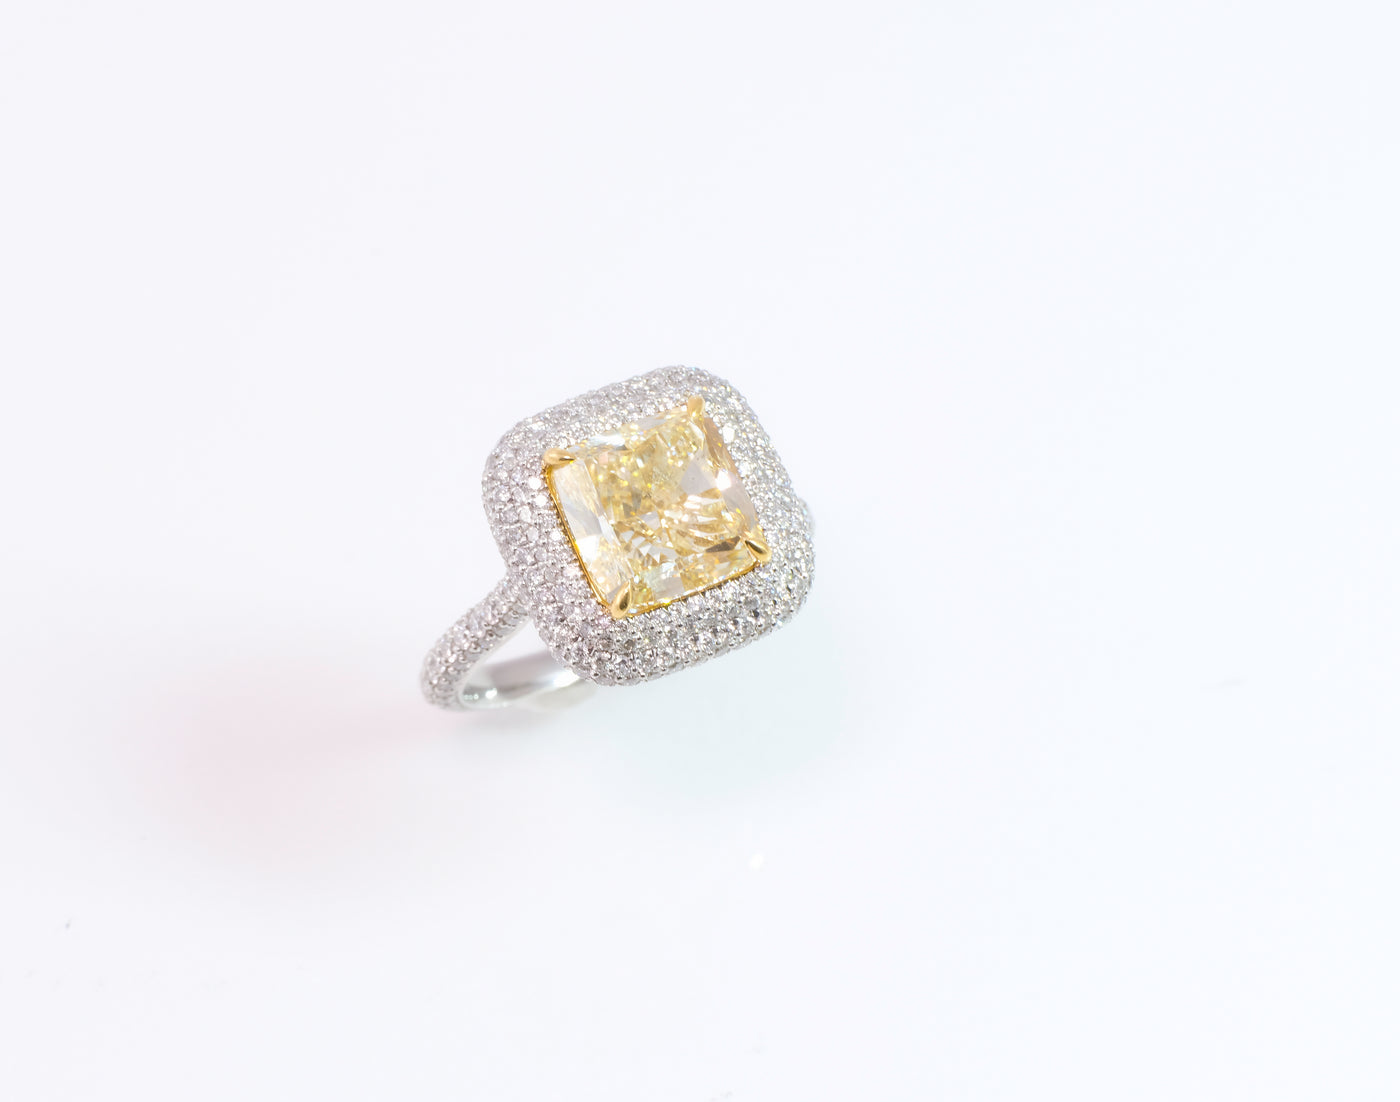 "Darling" 4.25-carat Fancy Light Yellow Diamond Platinum Ring